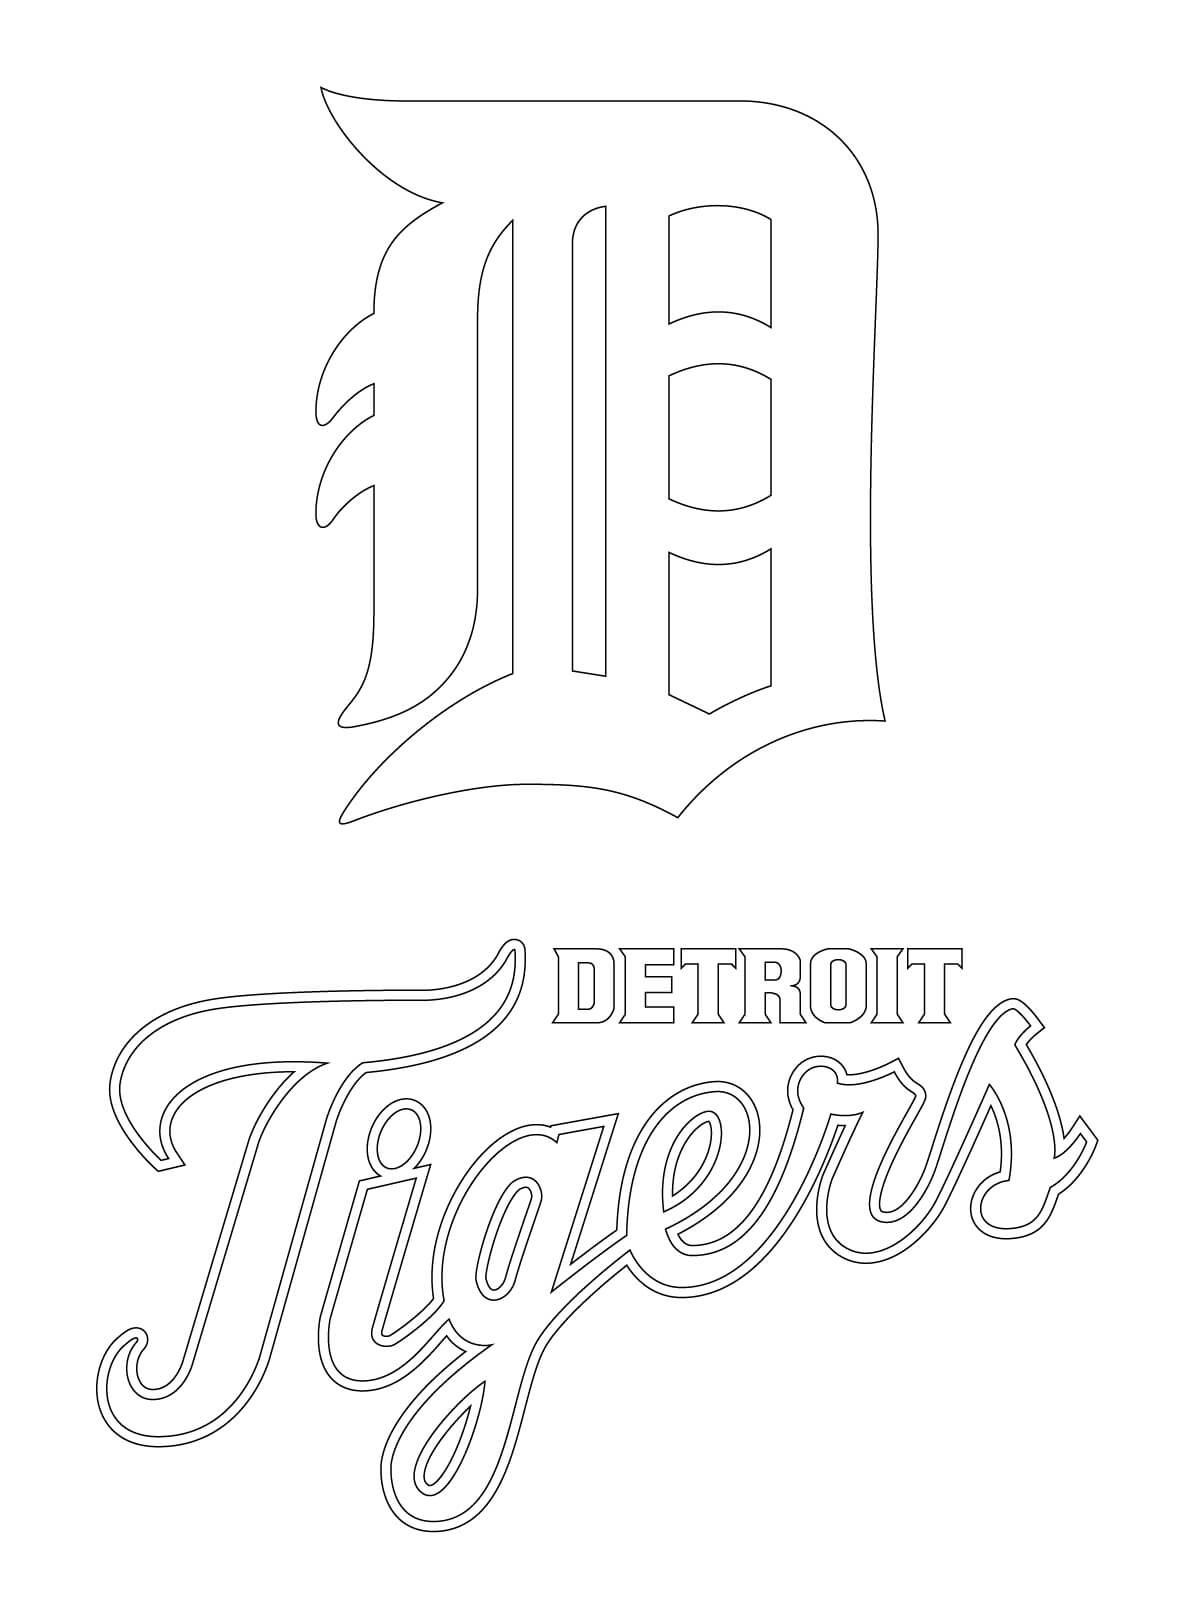 detroit tigers coloring pages